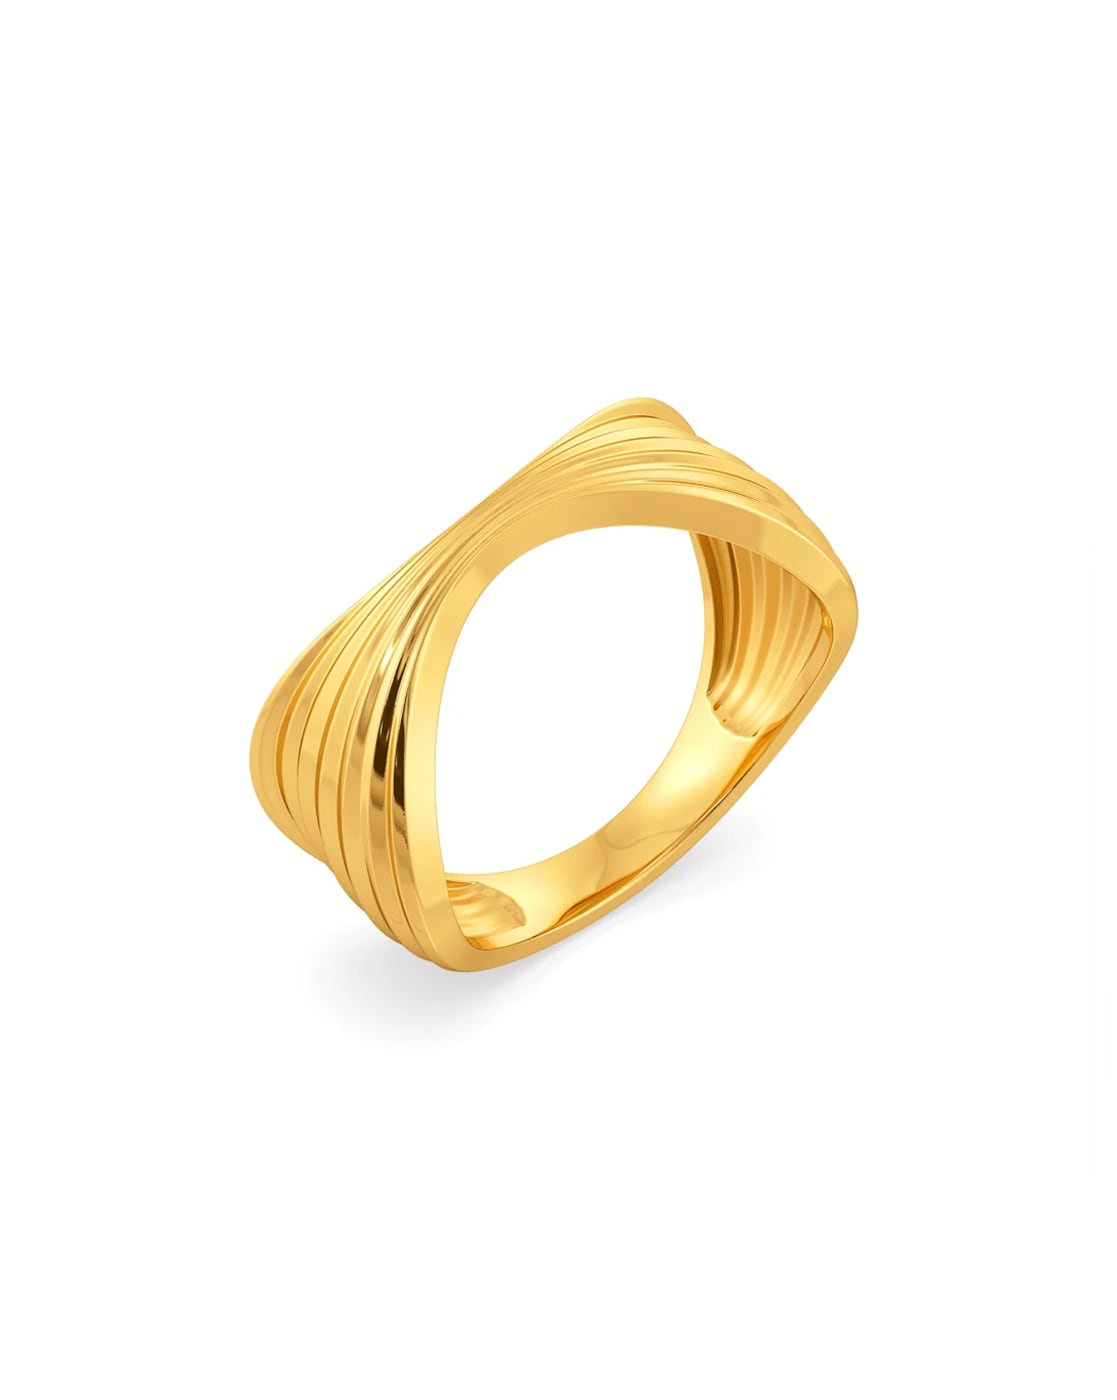 Pearl Men Engagement Yellow Gold Diamond Ring, 8g at Rs 65000 in Mumbai